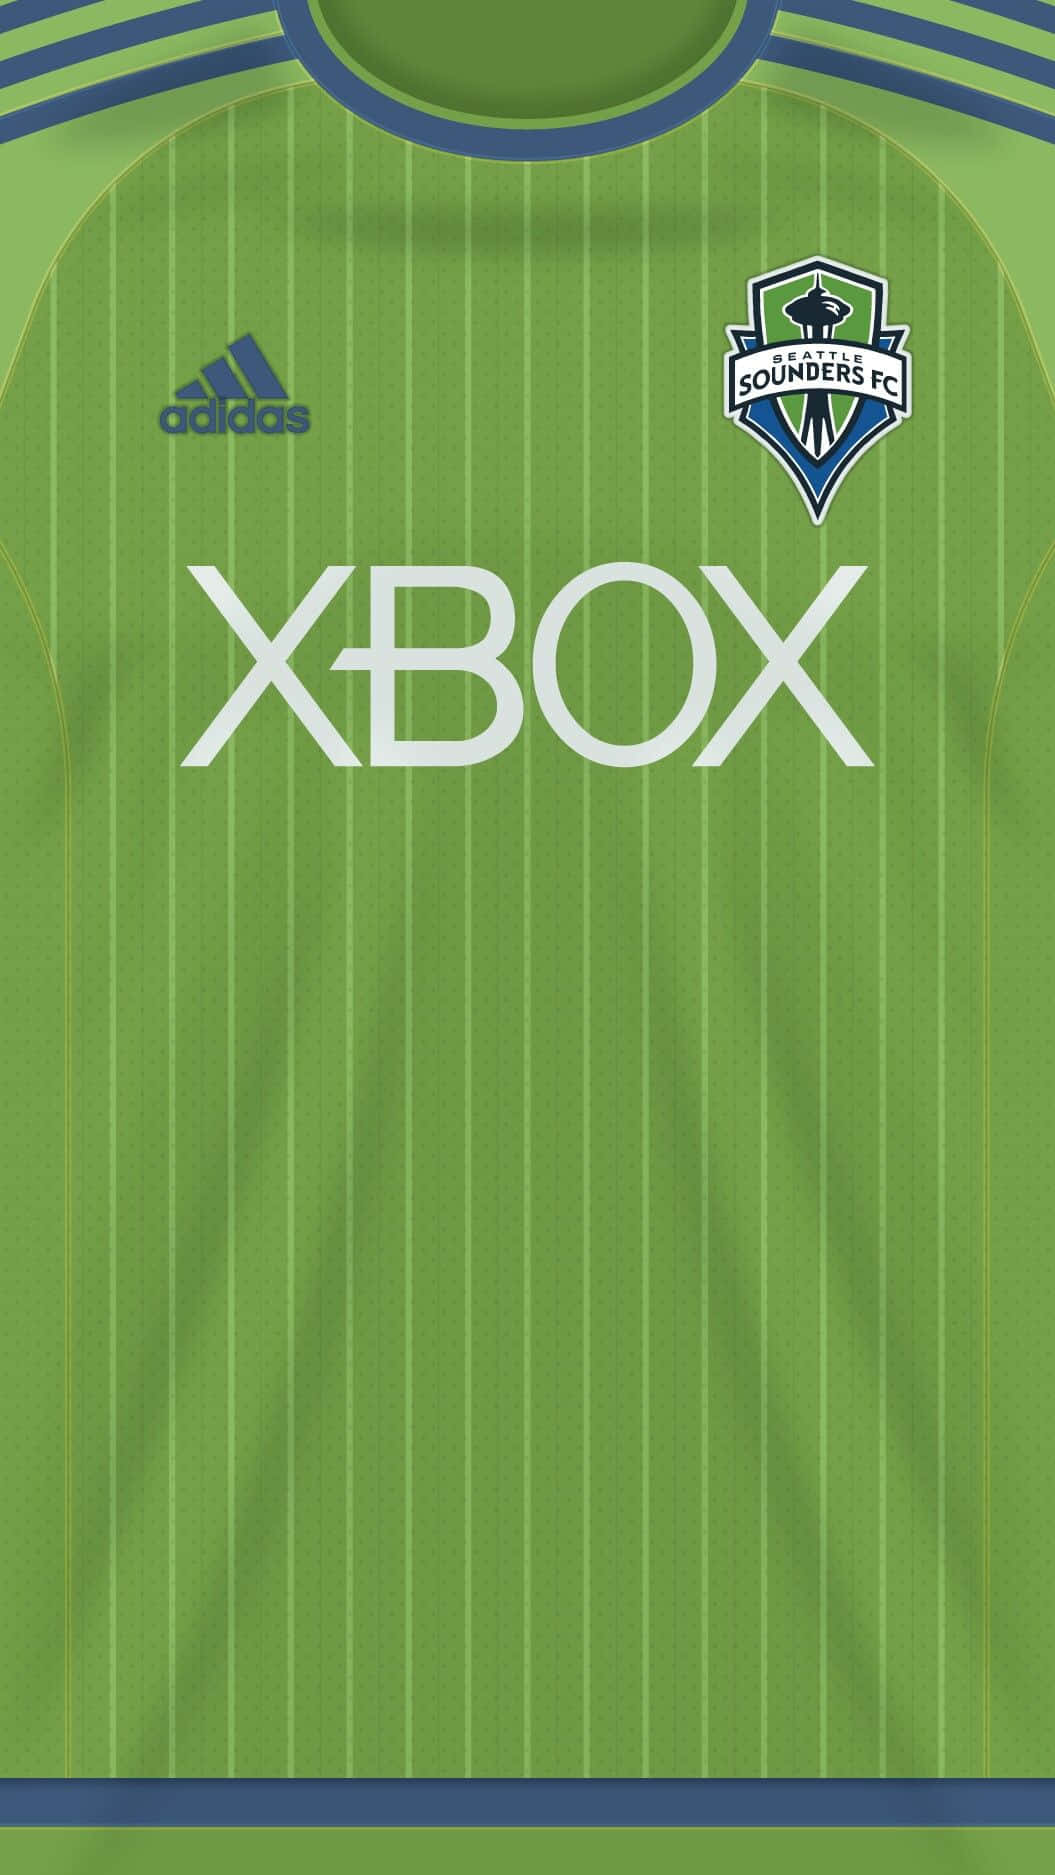 Seattlesounders Fc Adidas Xbox-tröja Wallpaper